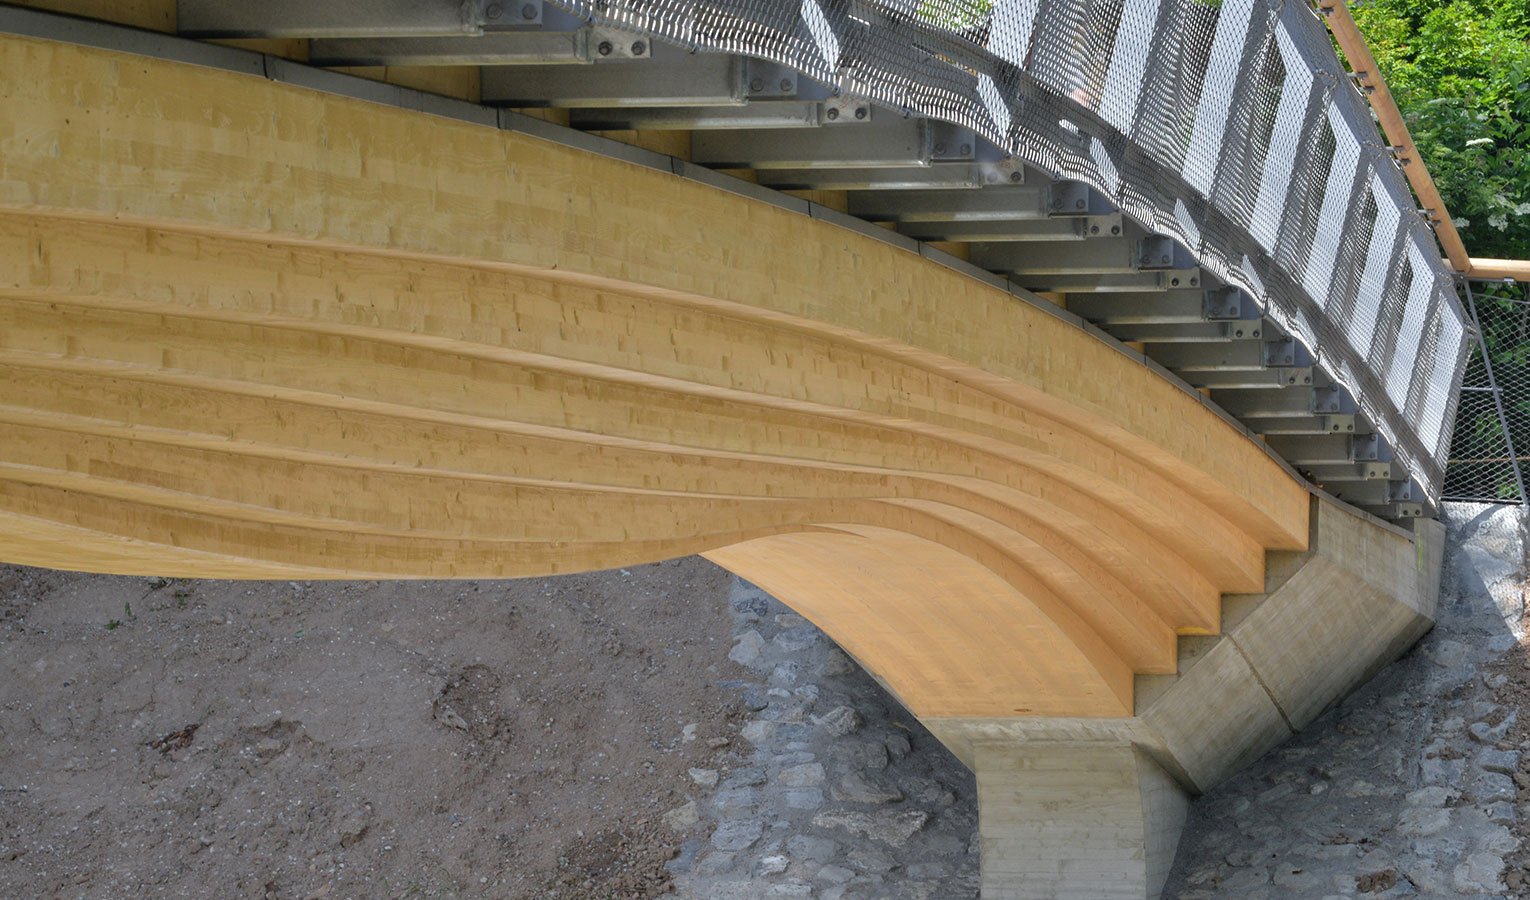 Integral timber bridges